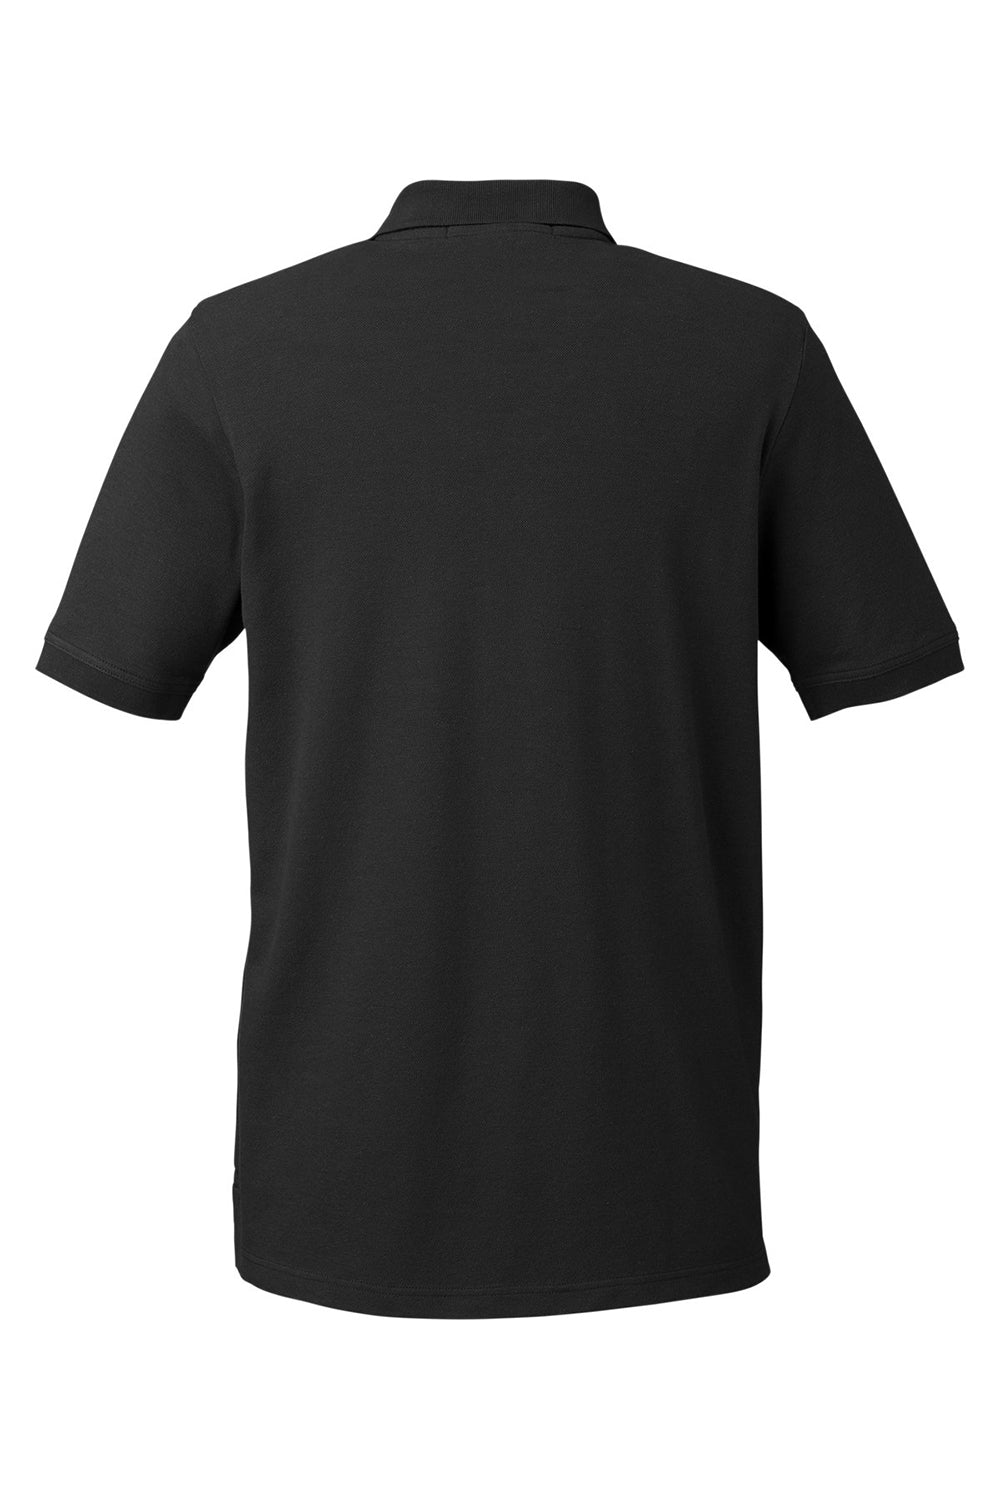 Devon & Jones DG100 Mens New Classics Performance Moisture Wicking Short Sleeve Polo Shirt Black Flat Back